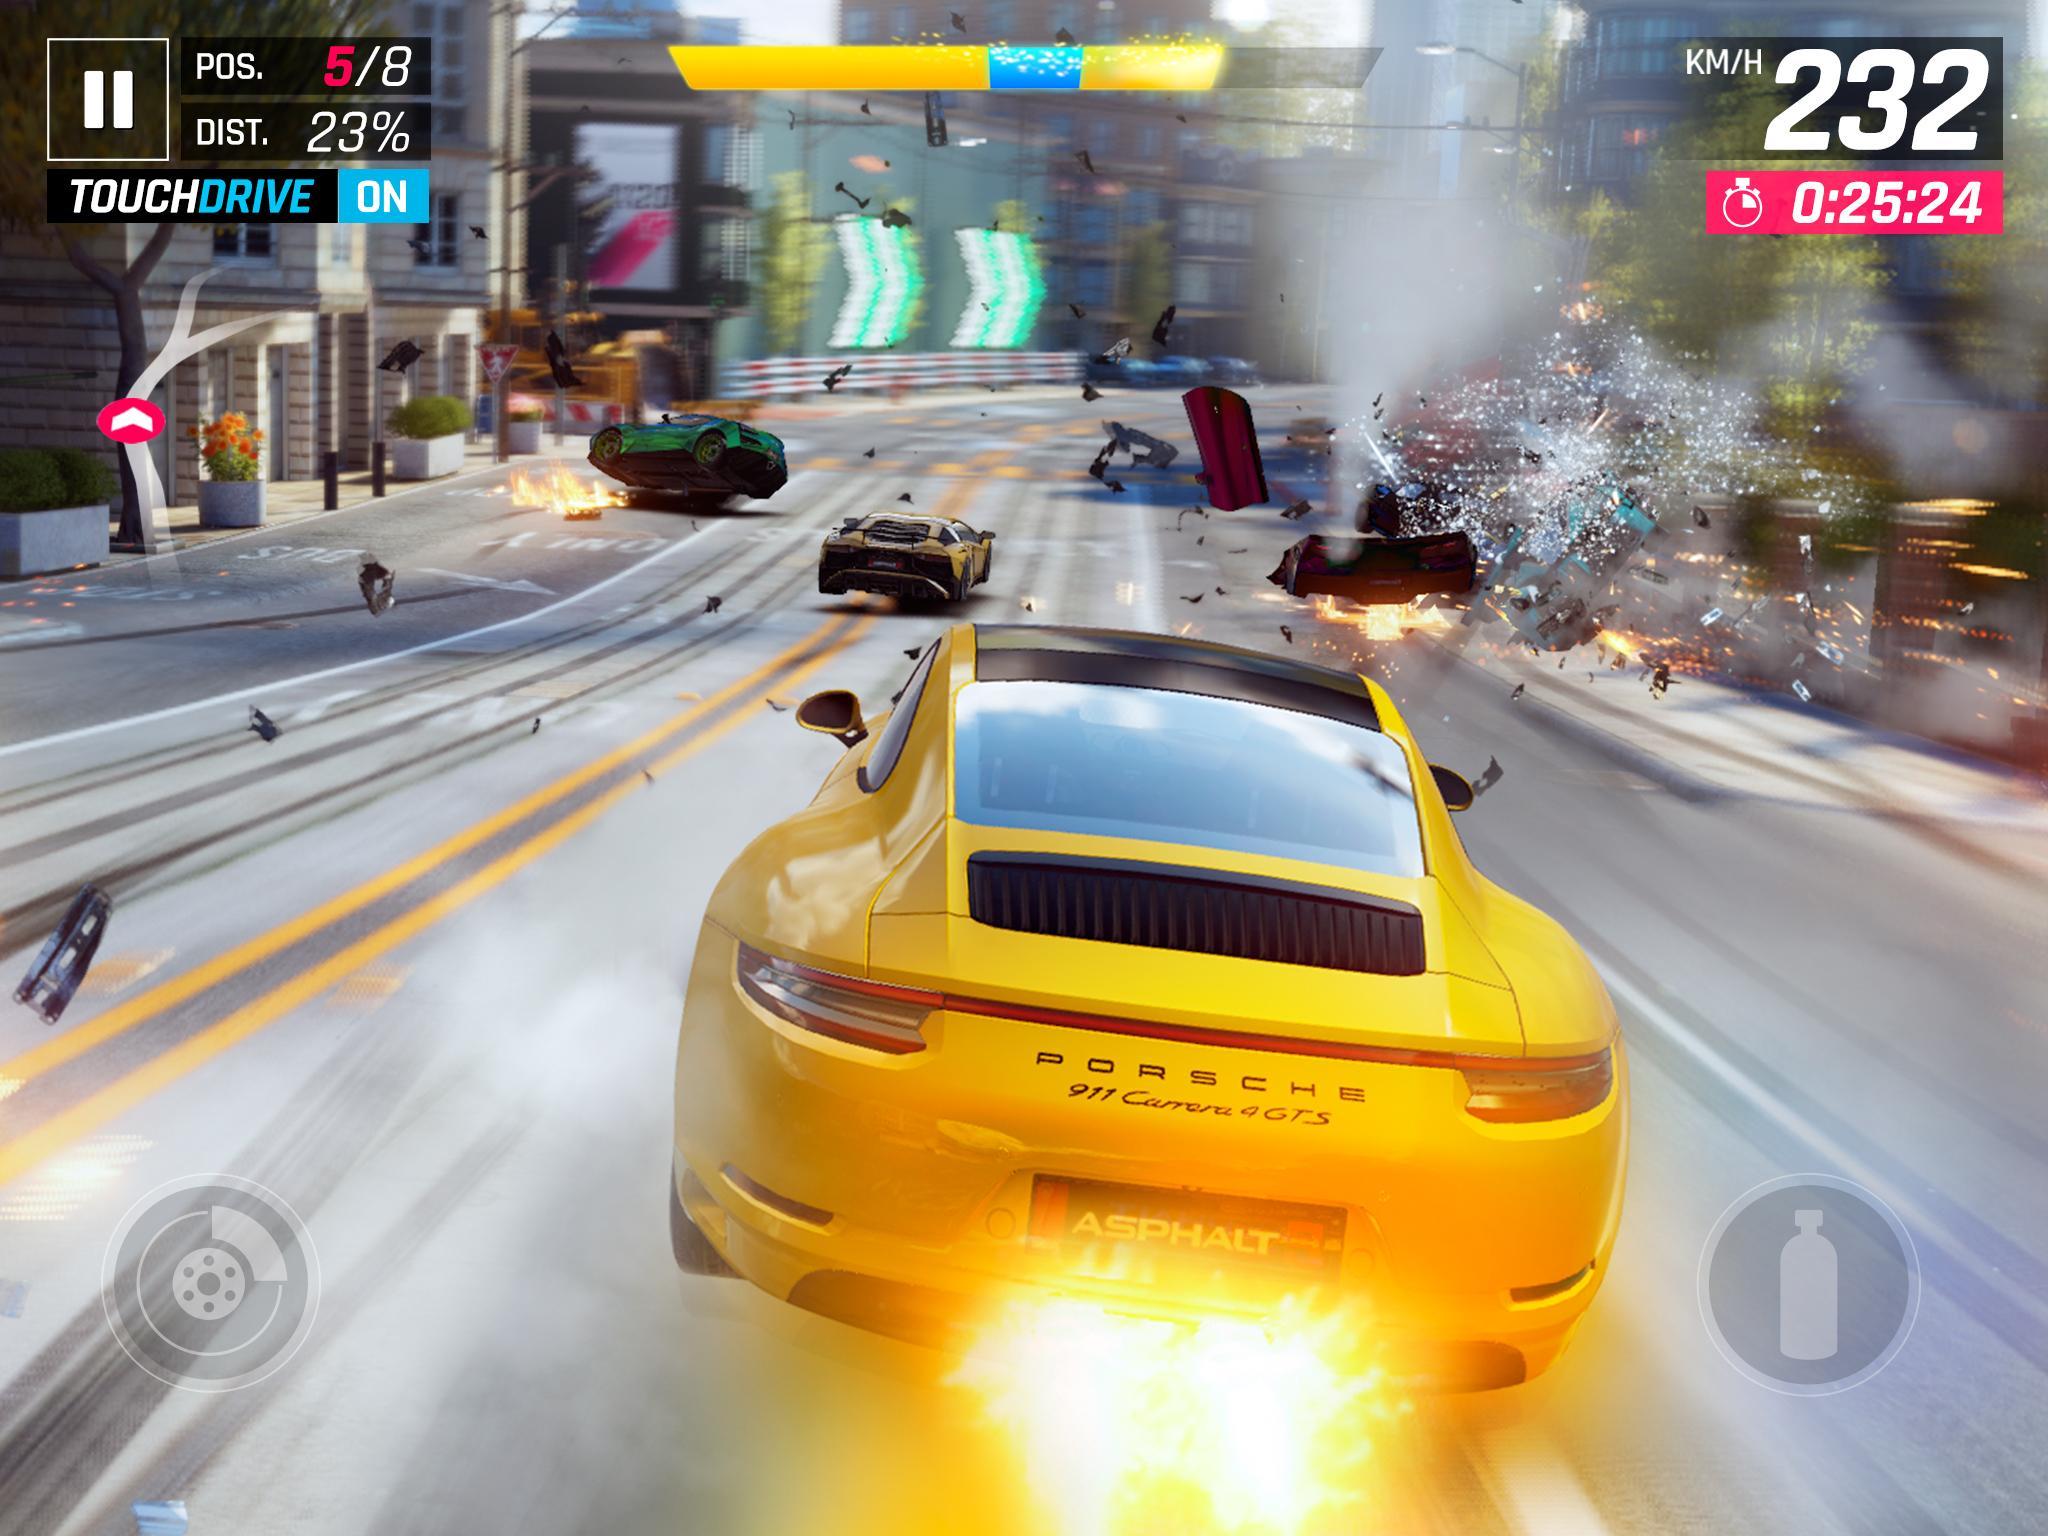 Asphalt 9 Legends - Epic Car Action Racing Game 2.5.3a Screenshot 13